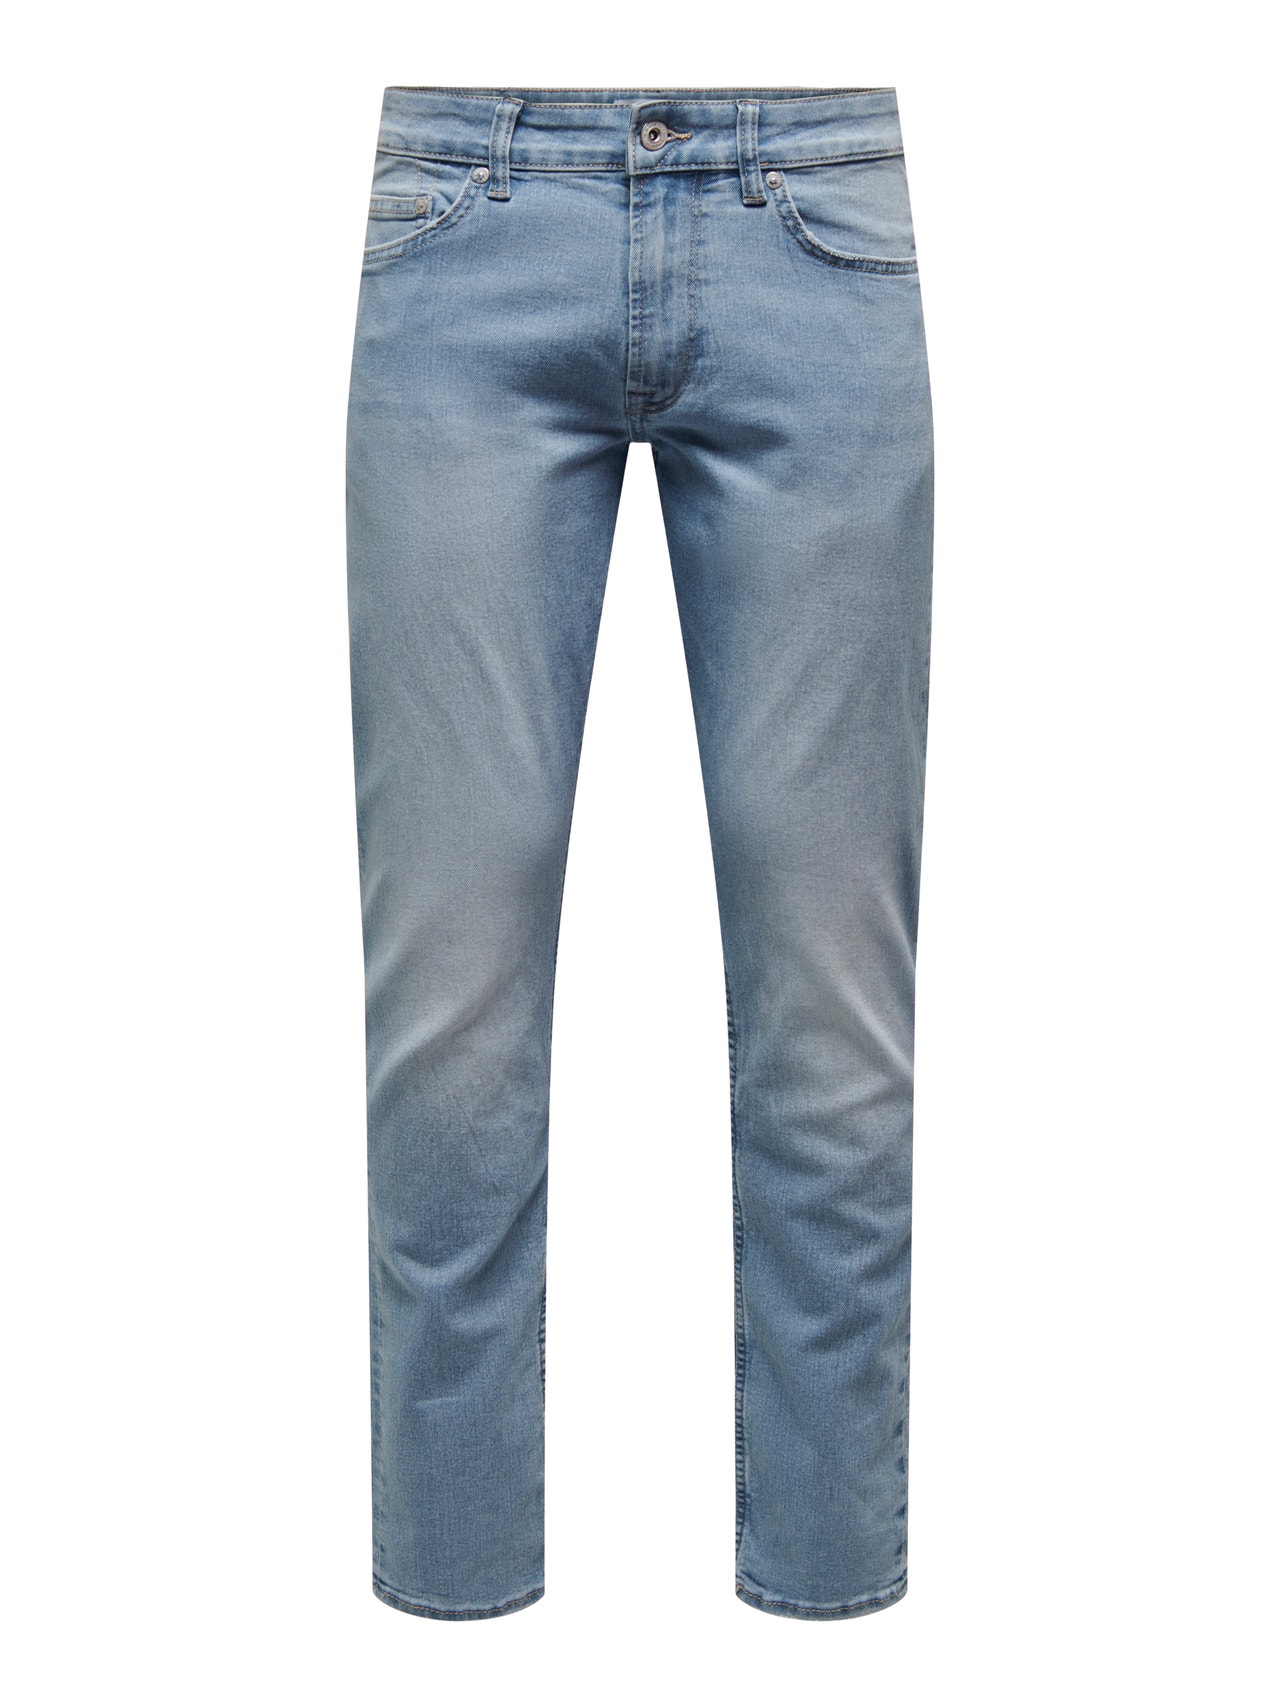 ONLY & SONS Slim Fit Regular rise Jeans -Light Blue Denim - 22024326